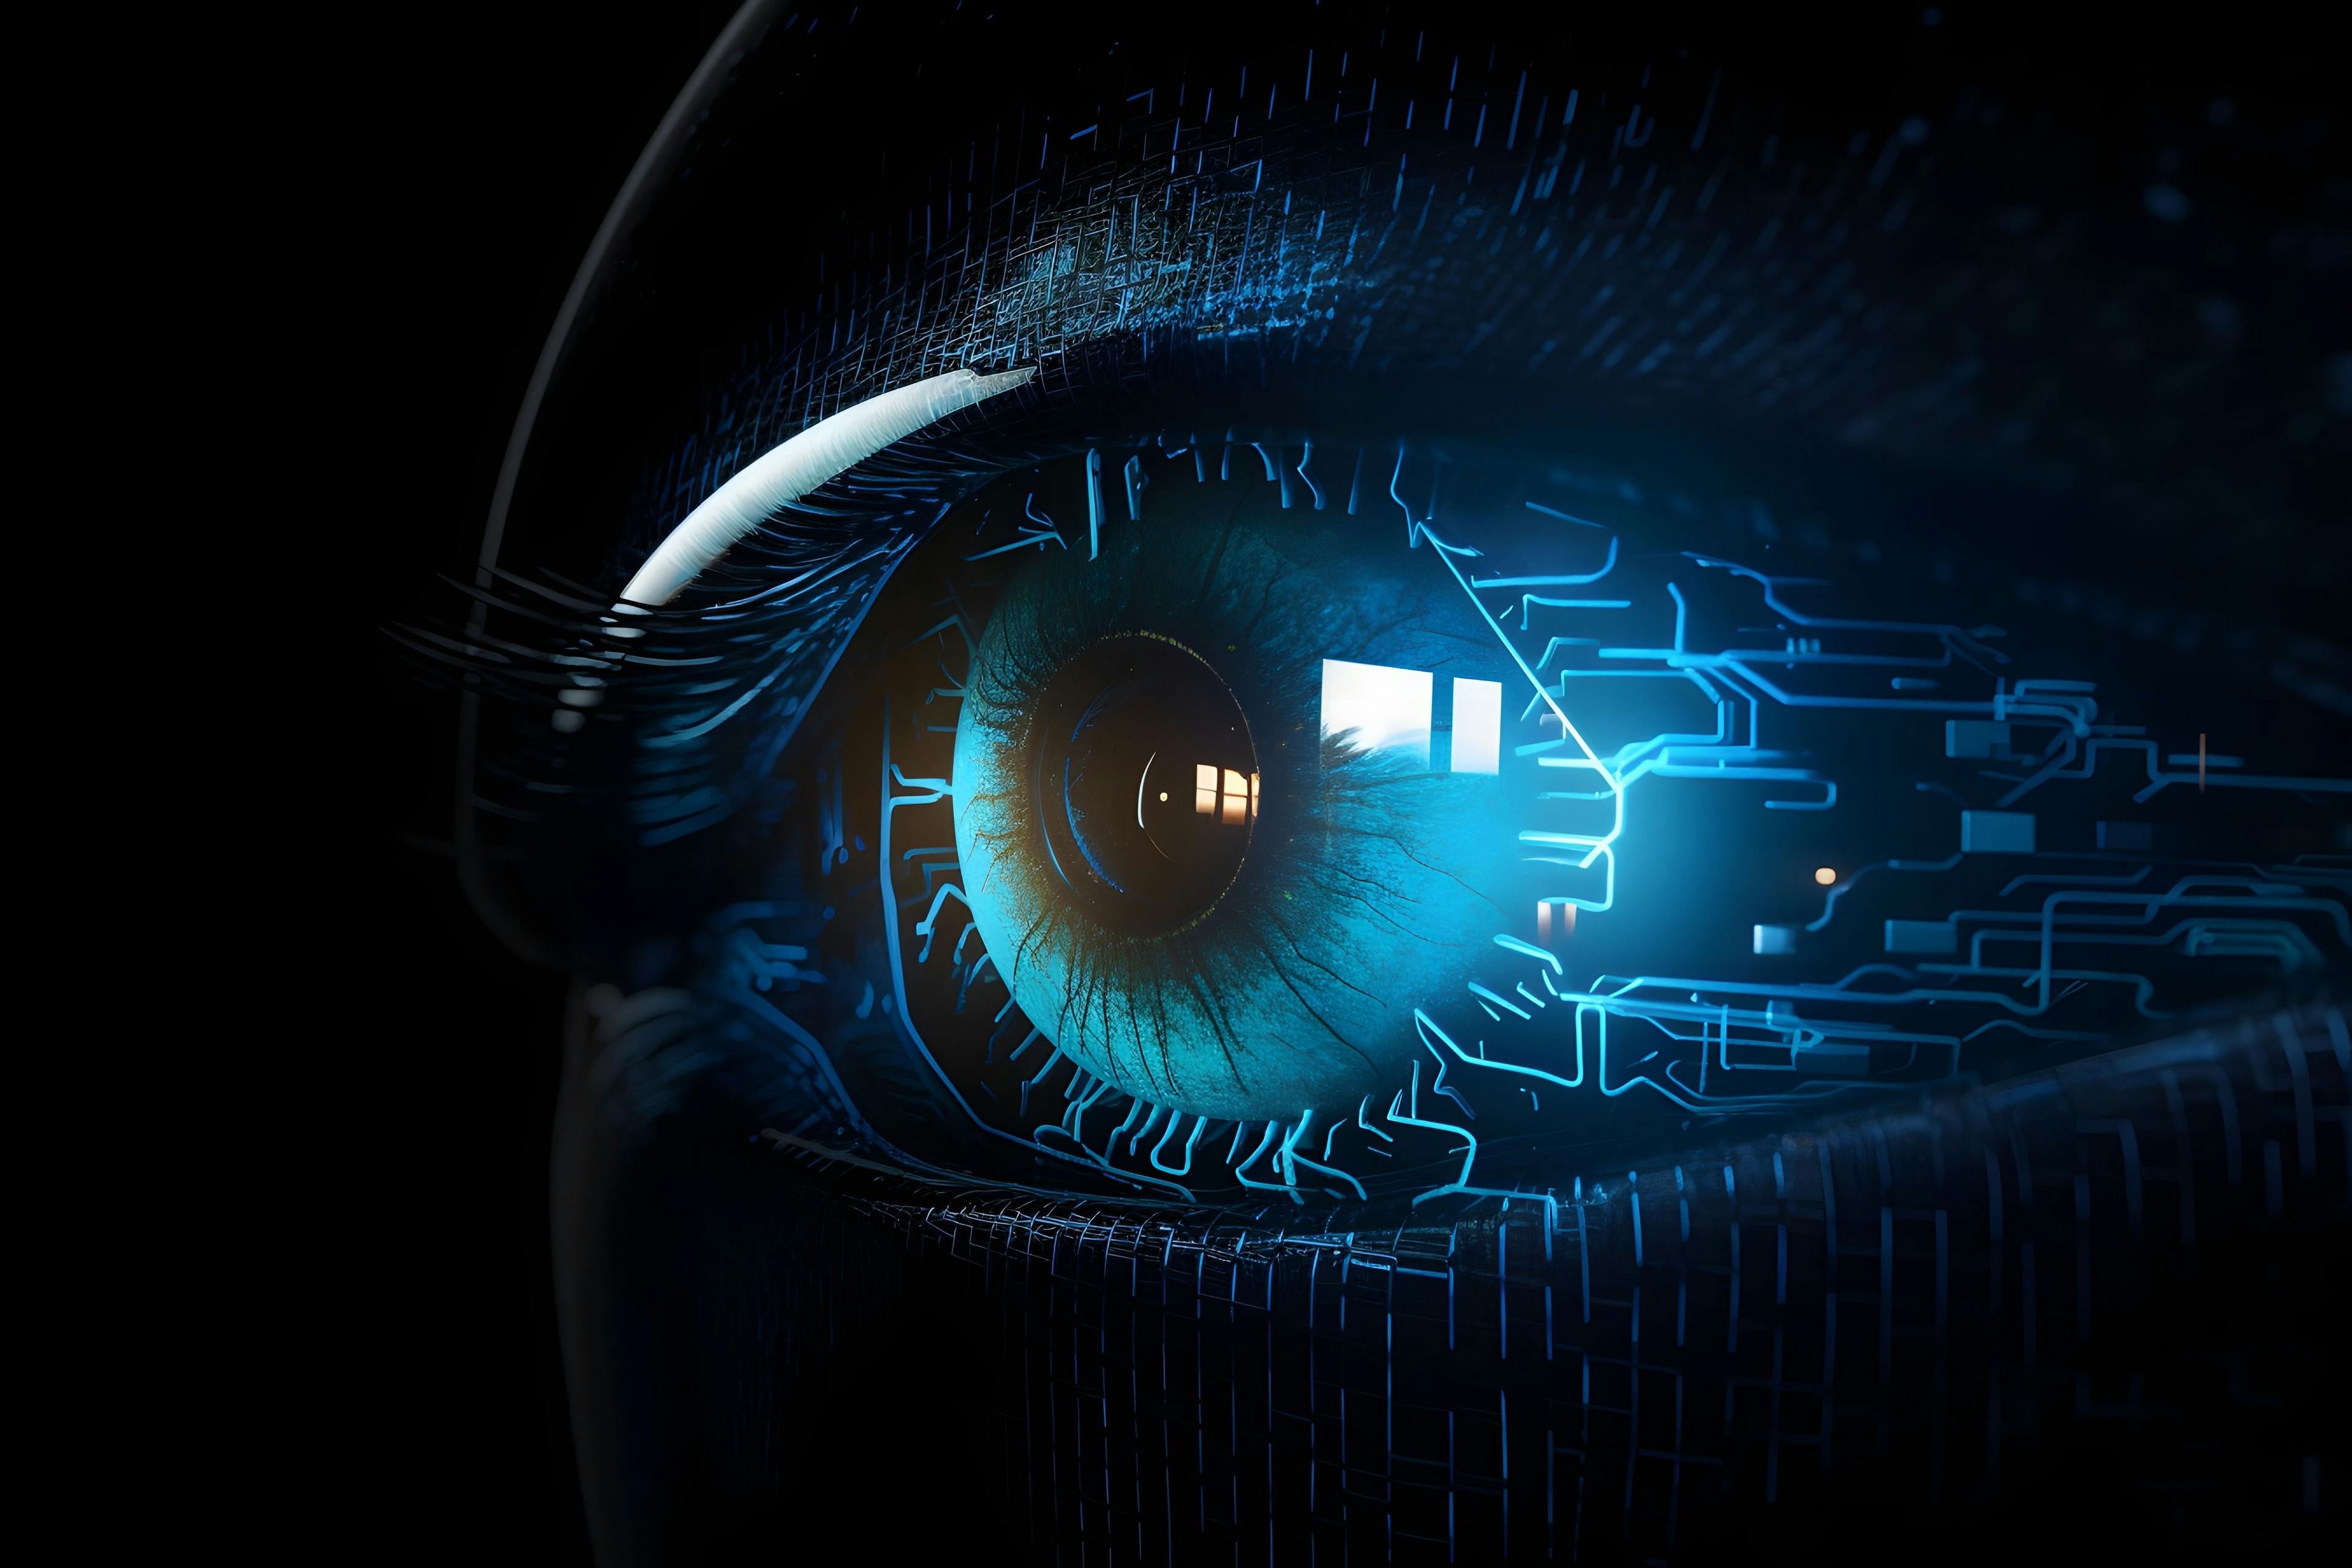 Digital eye visualizing Artificial Intelligence | Image credit: Patrick Helmholz - stock.adobe.com